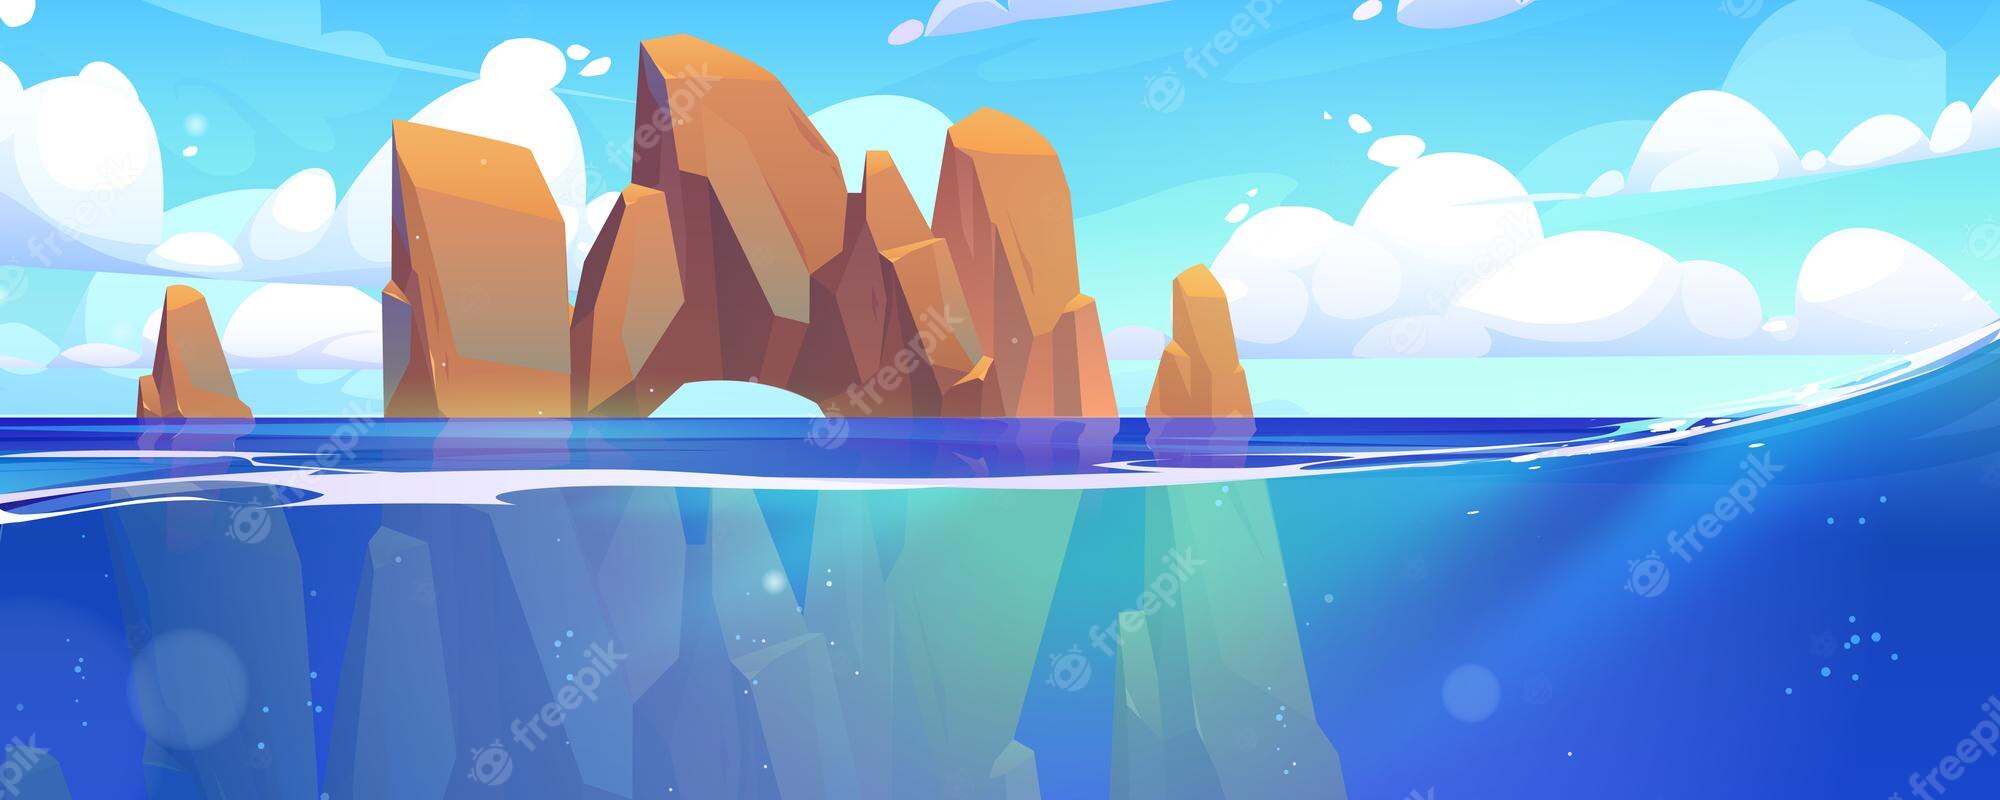 Ocean Cartoon Background Image